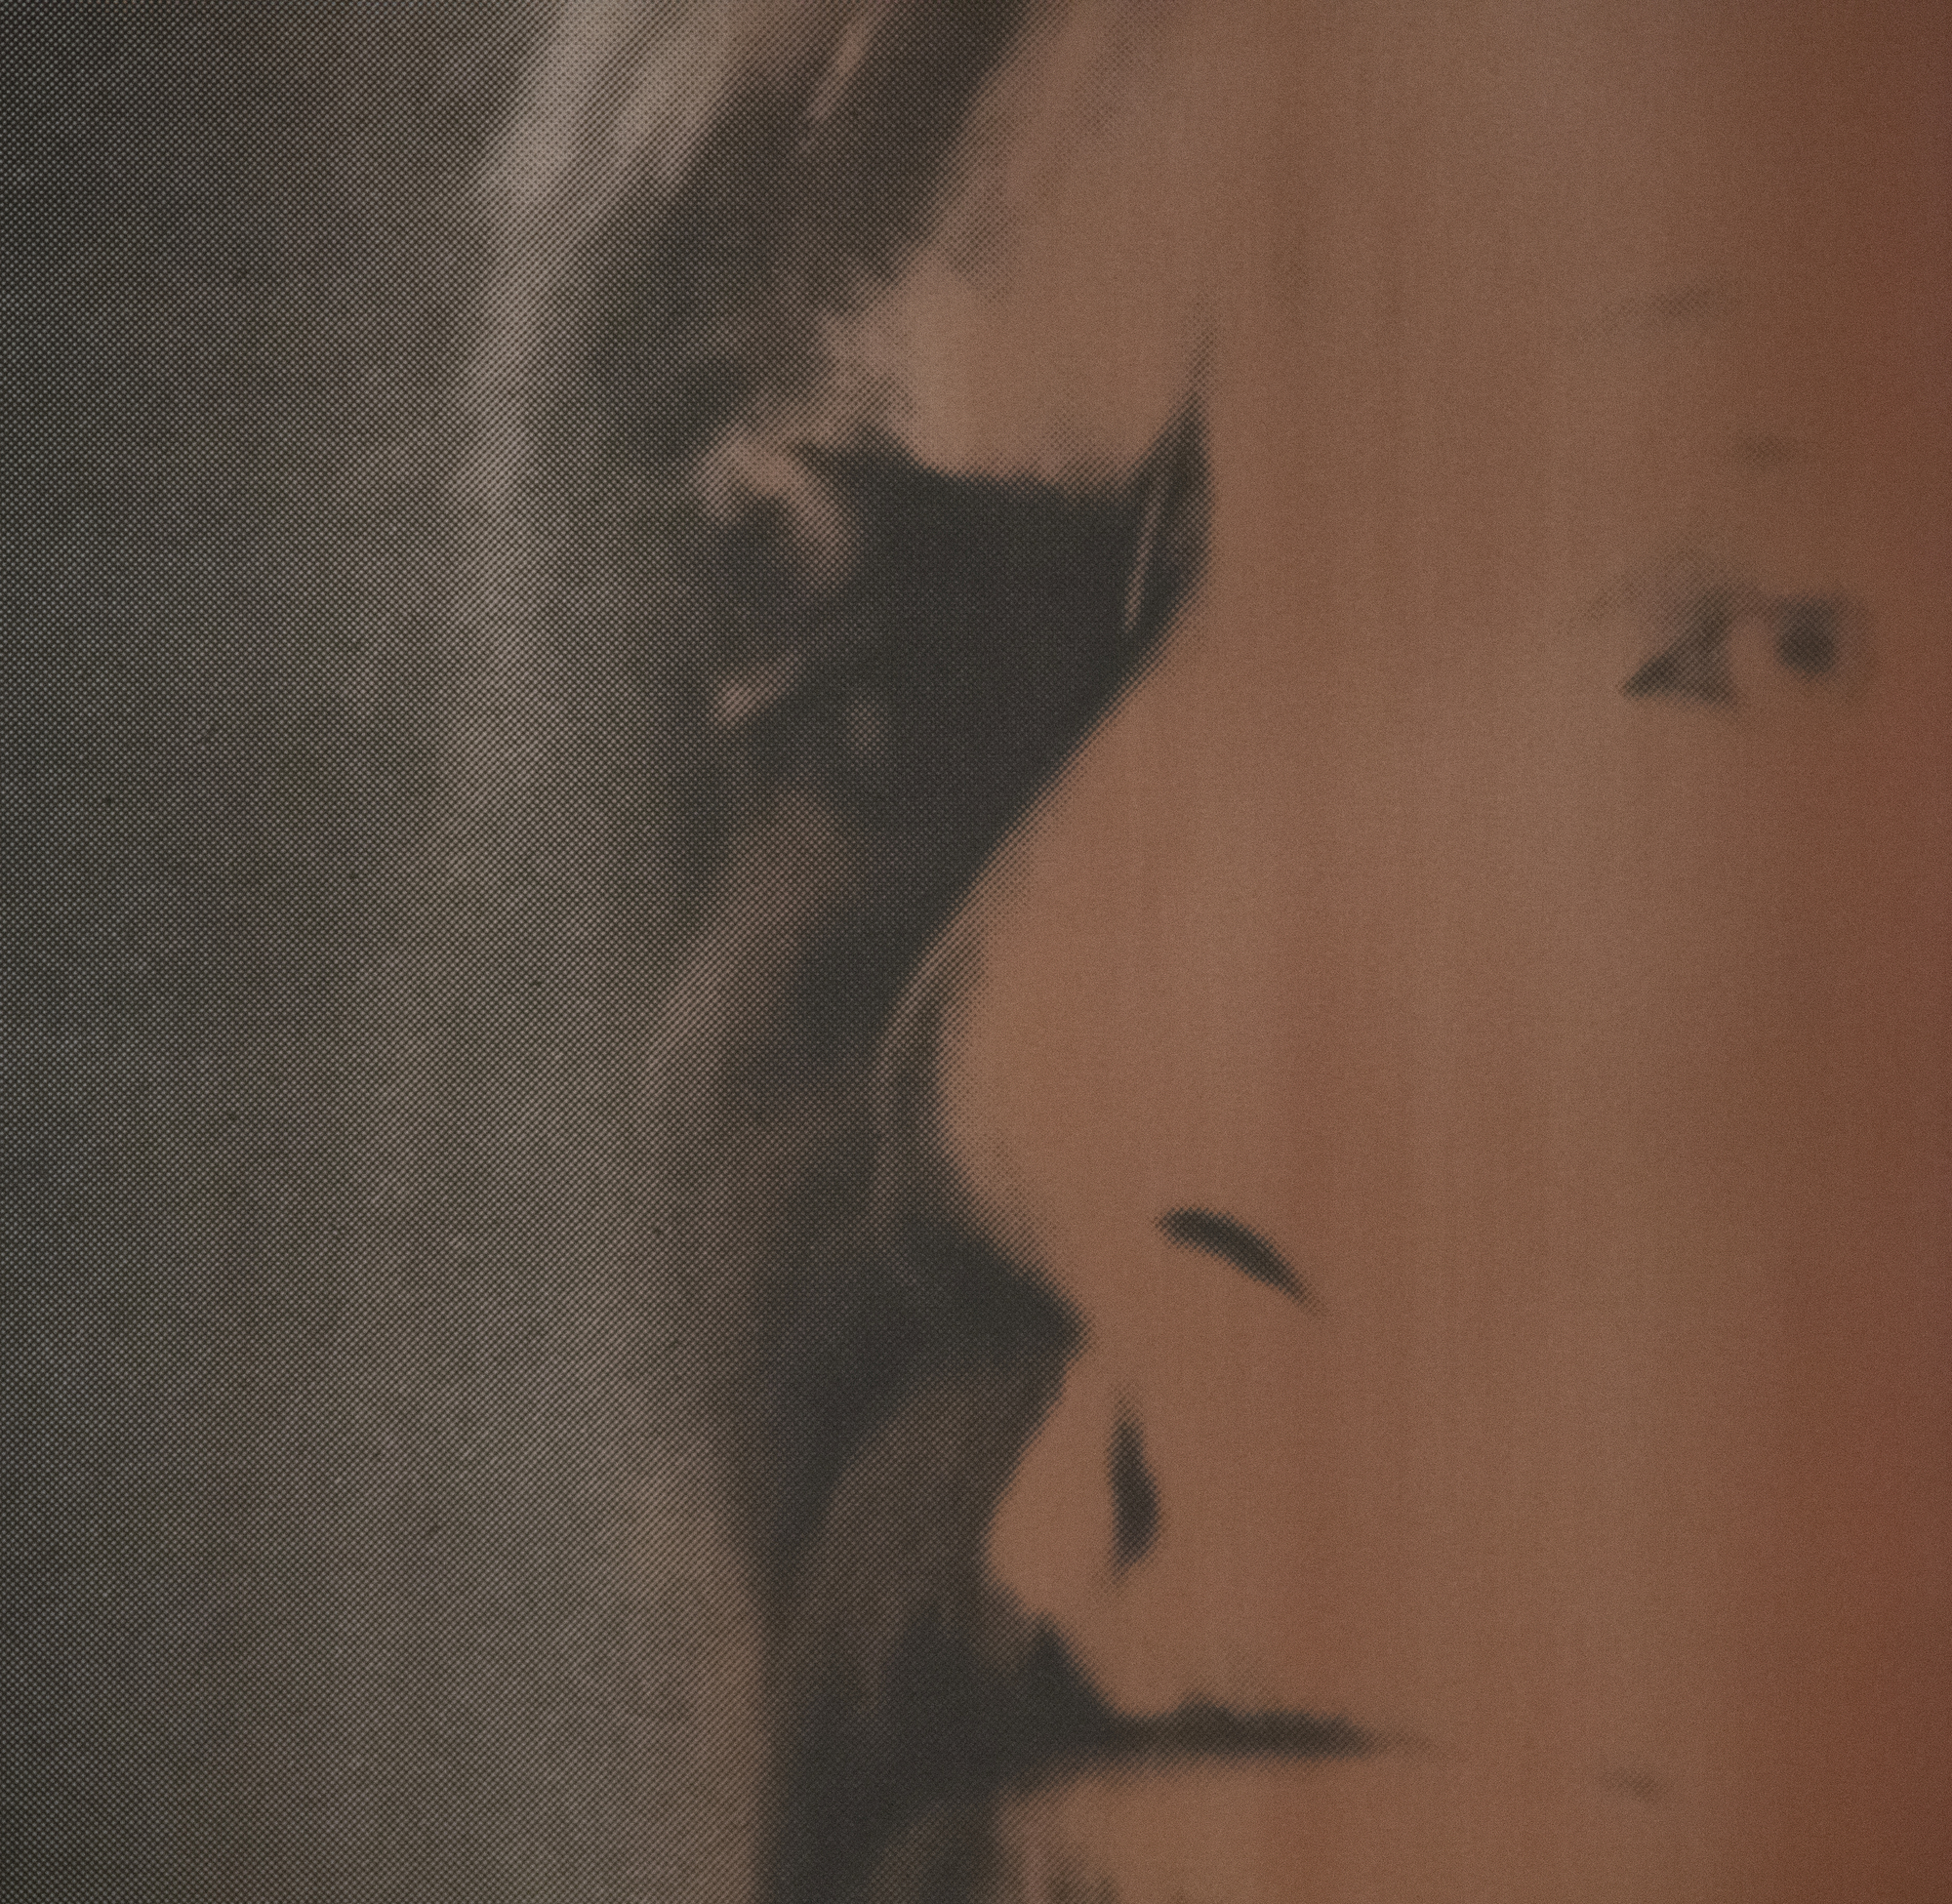 ANDY WARHOL - The Shadow (神話より) - 紙にダイヤモンドダスト入りカラースクリーンプリント - 37 1/2 x 37 1/2 in.